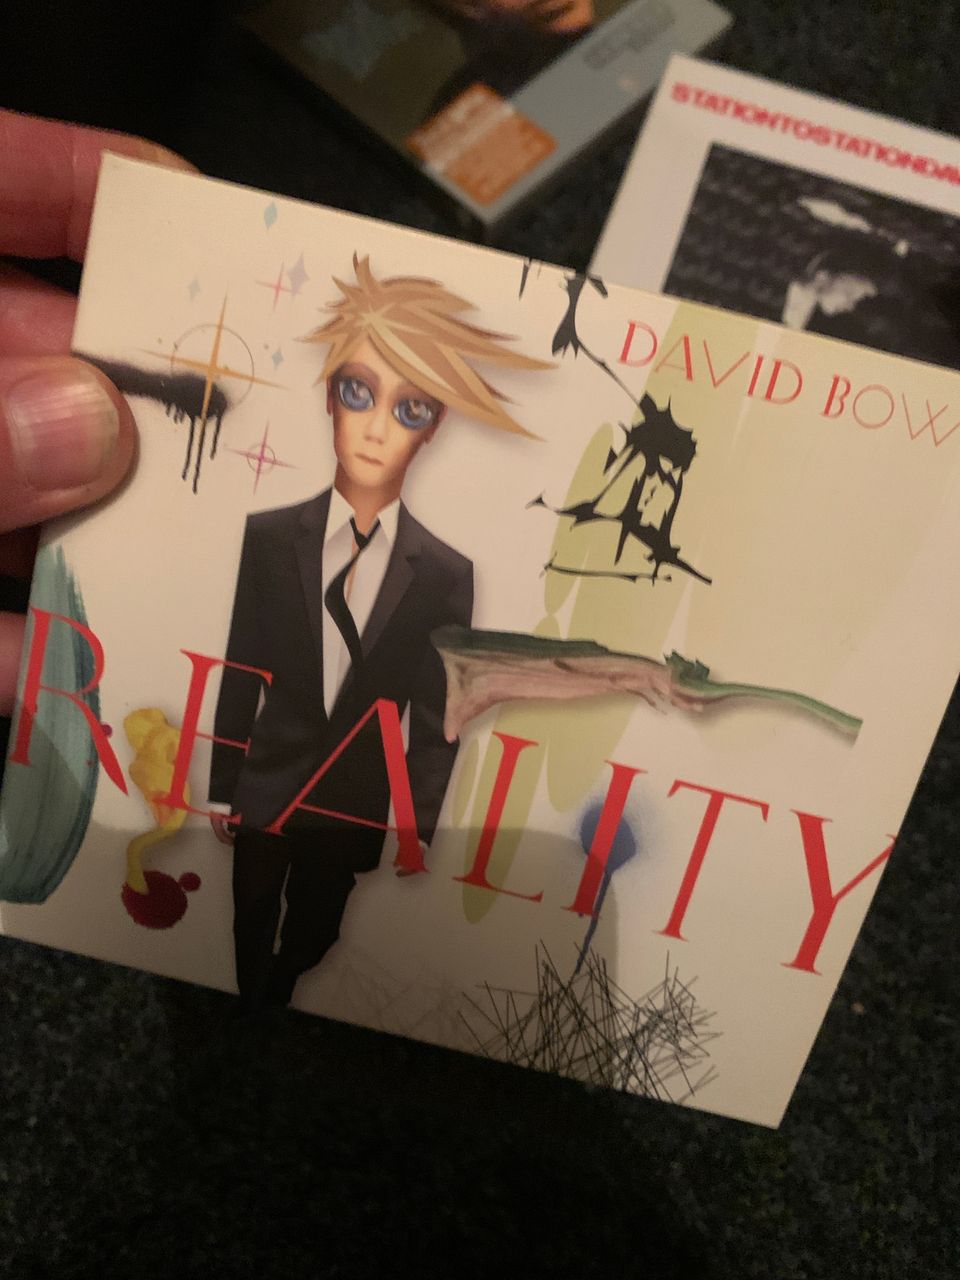 David Bowie Reality 2cd